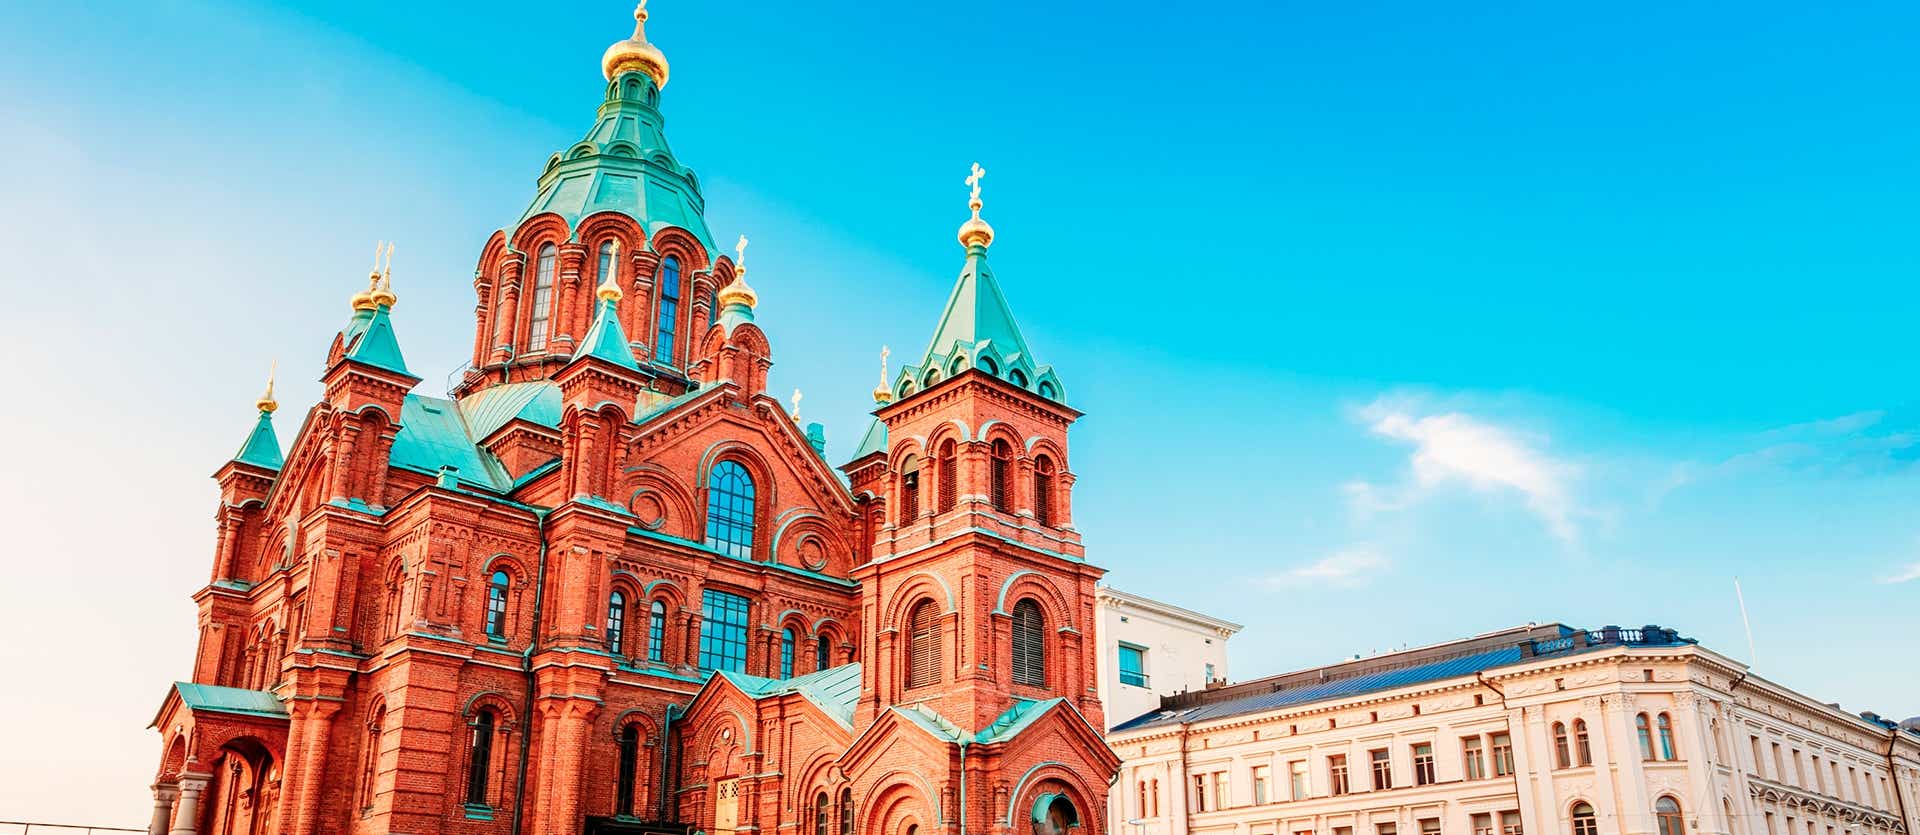  Uspenski Cathedral <span class="iconos separador"></span> Helsinki